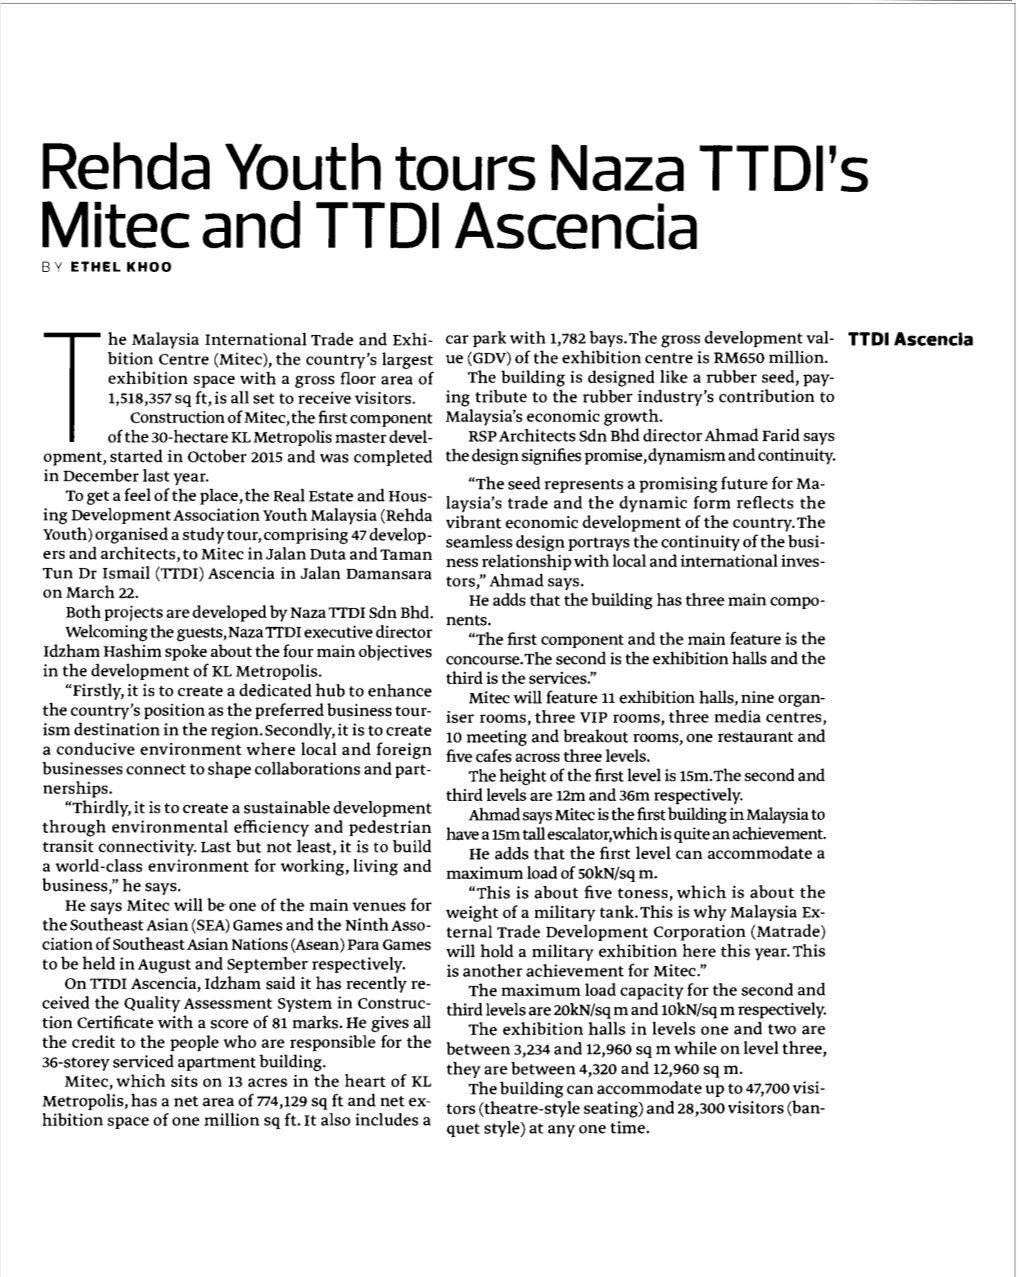 Rehda Youth Tours Naza TTDI's Mitec and TTDI Ascencia